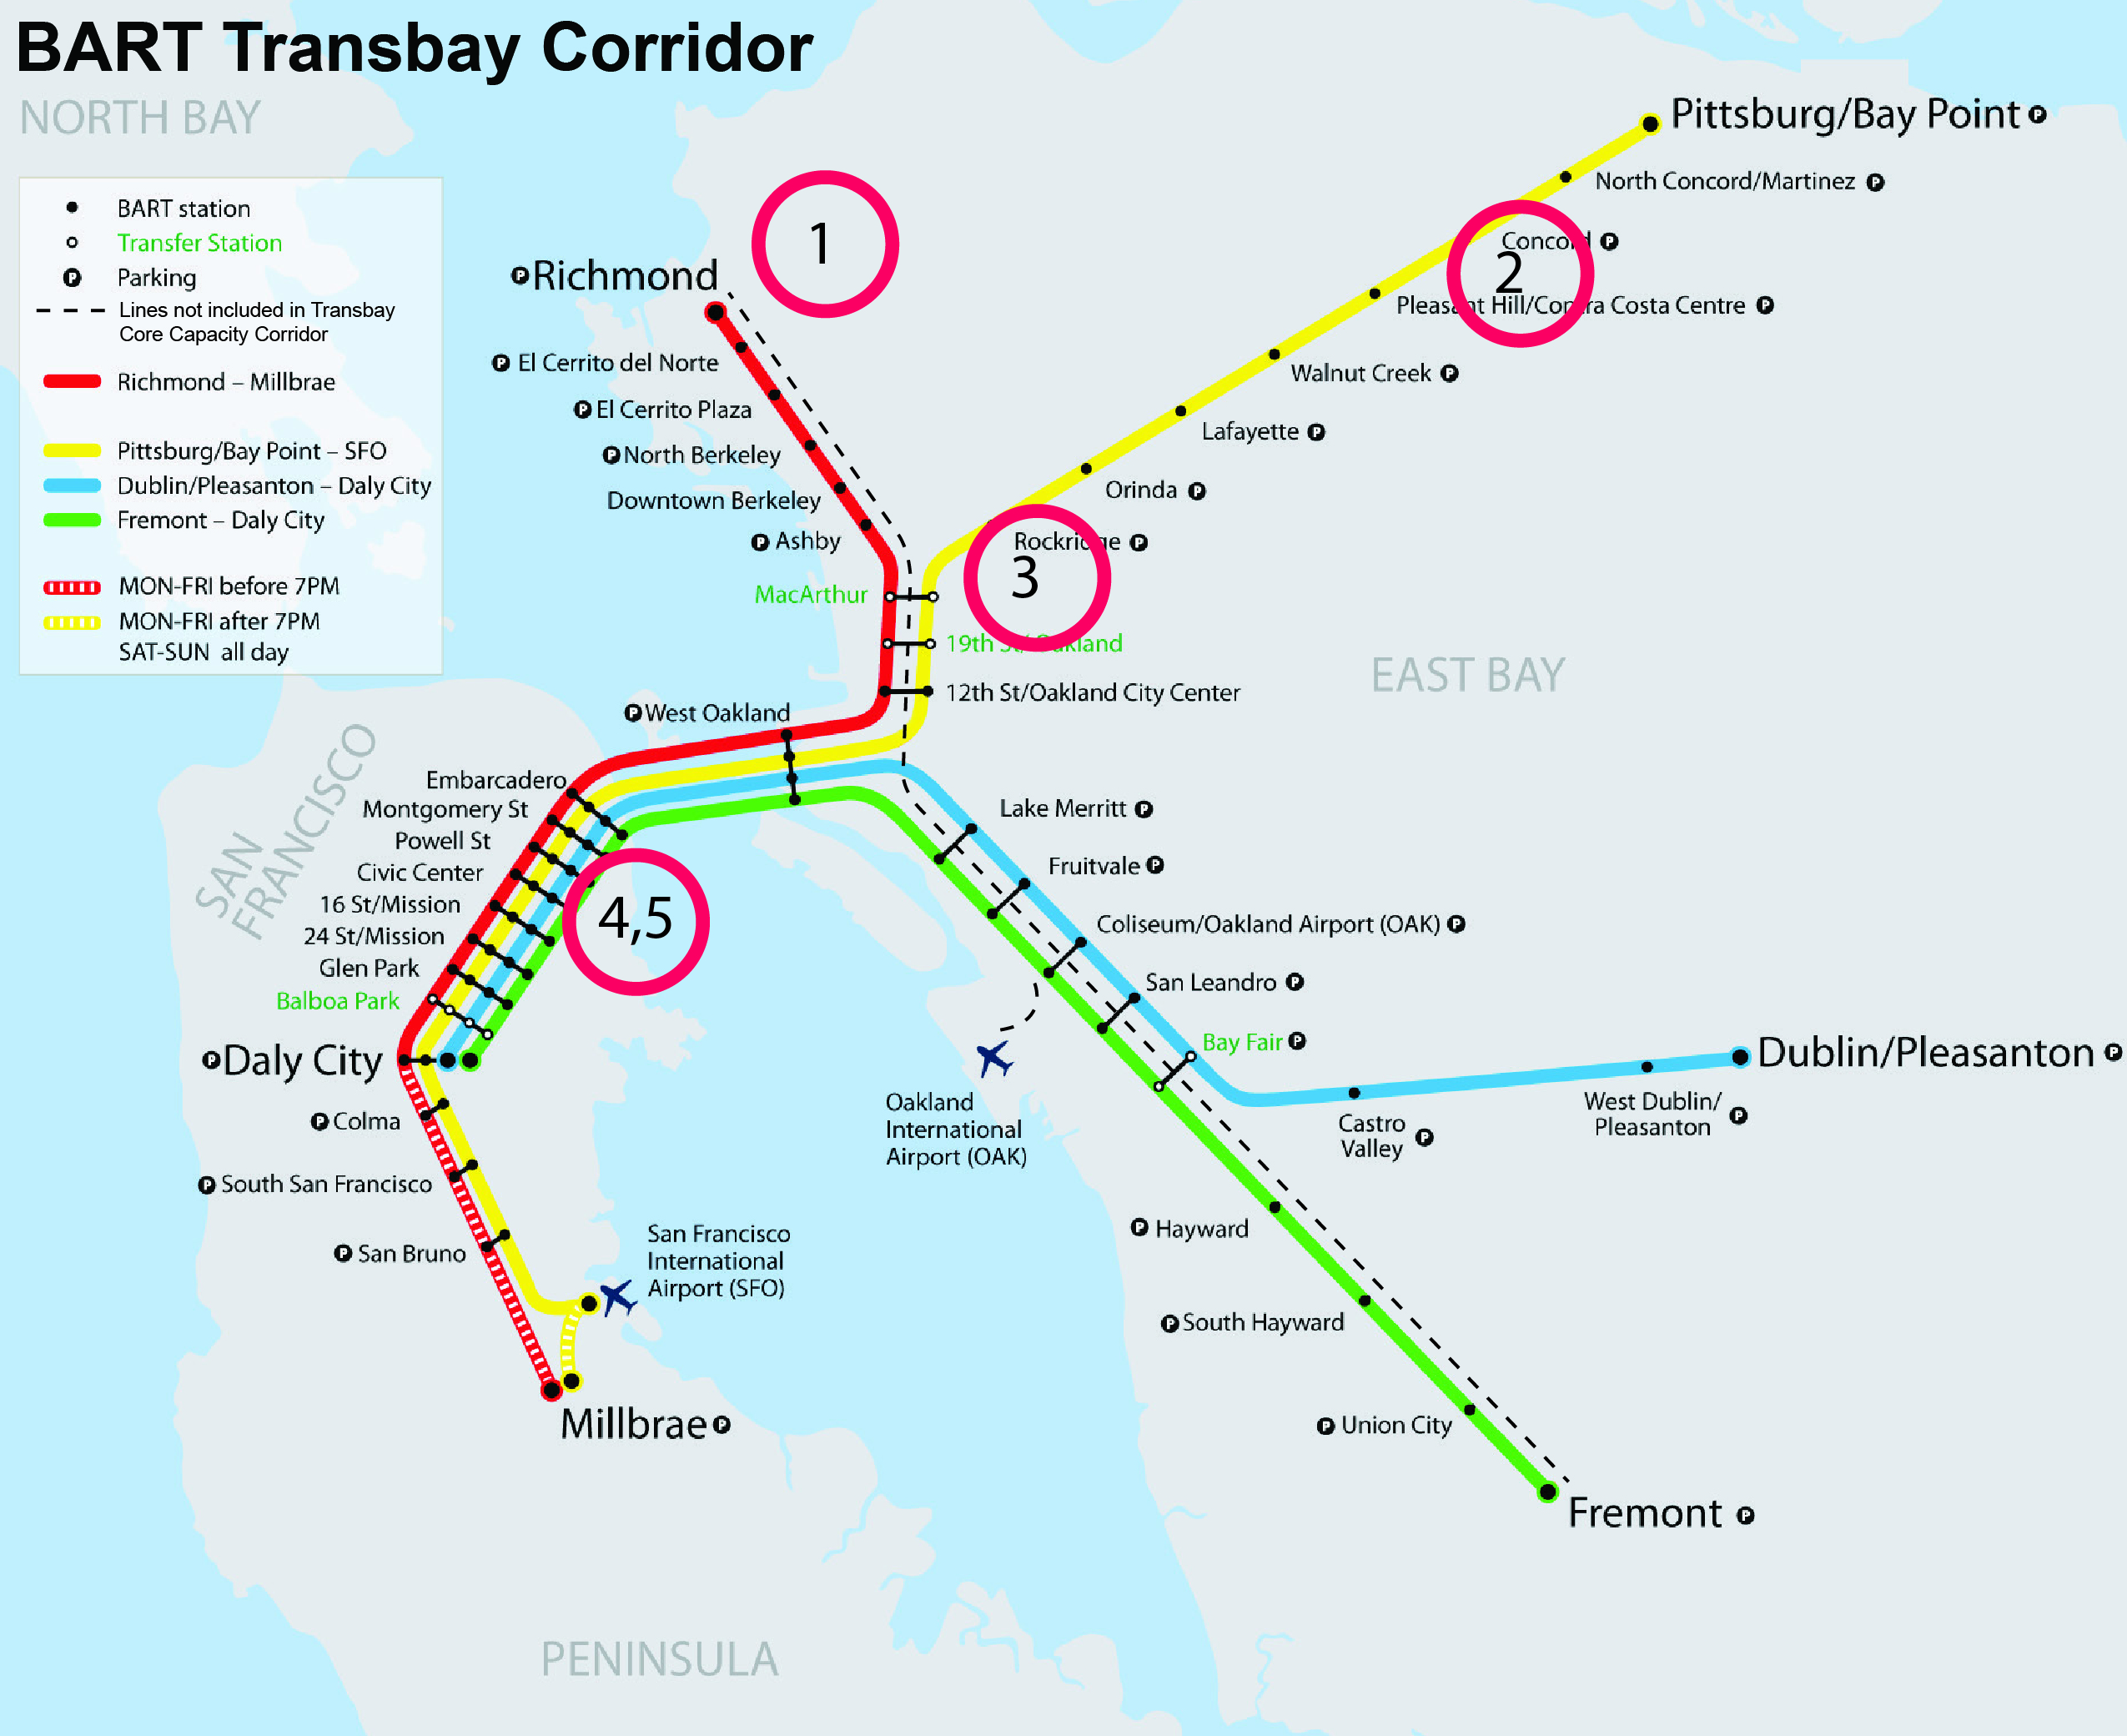 transbay corridor core capacity program | bart.gov